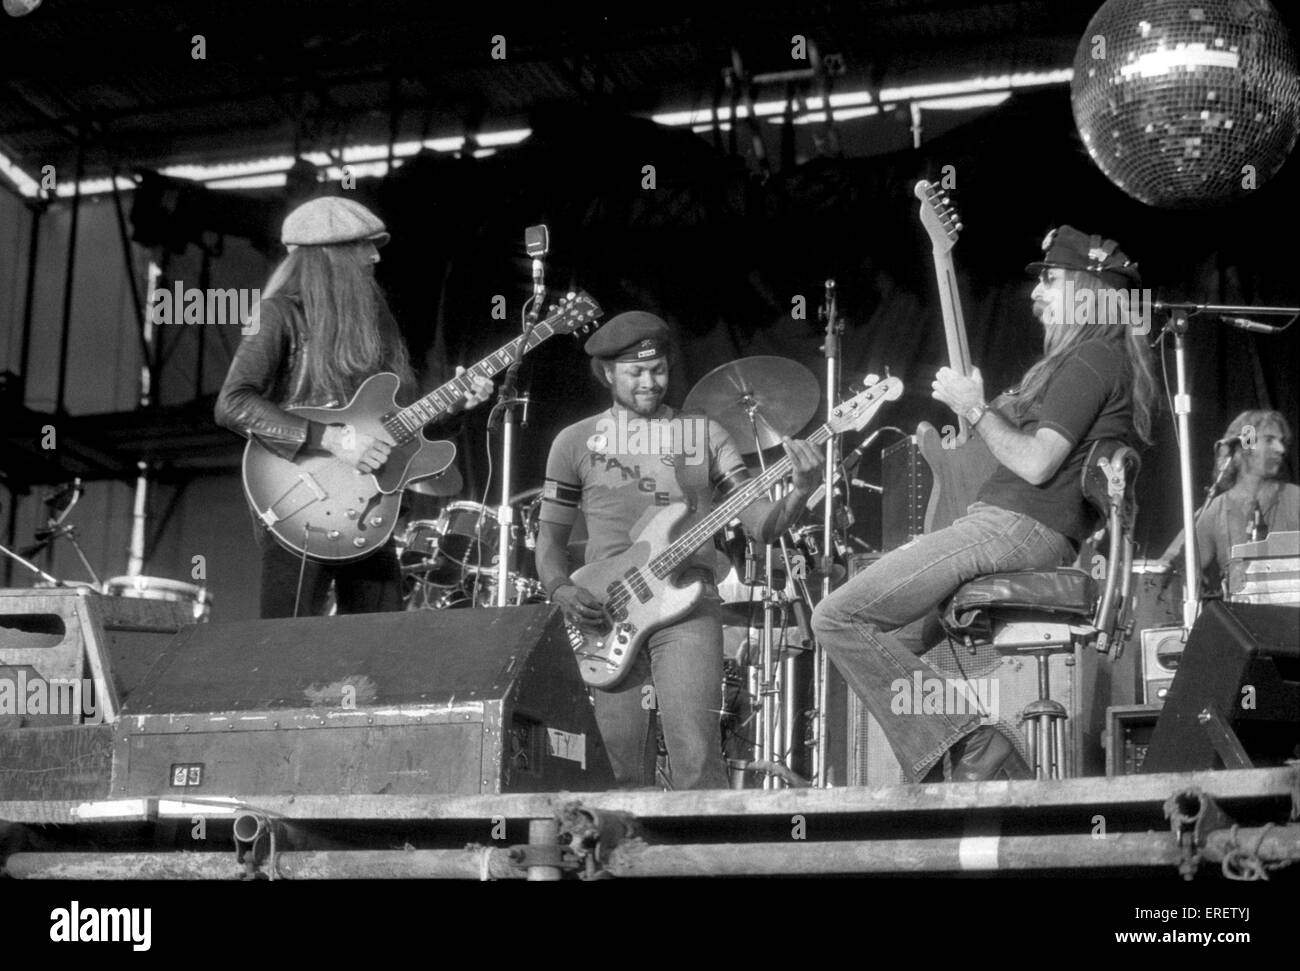 Amerikanische Rock-band The Doobie Brothers, erklingt in der Lesung-Rock-Festival, England, im August 1977. Stockfoto